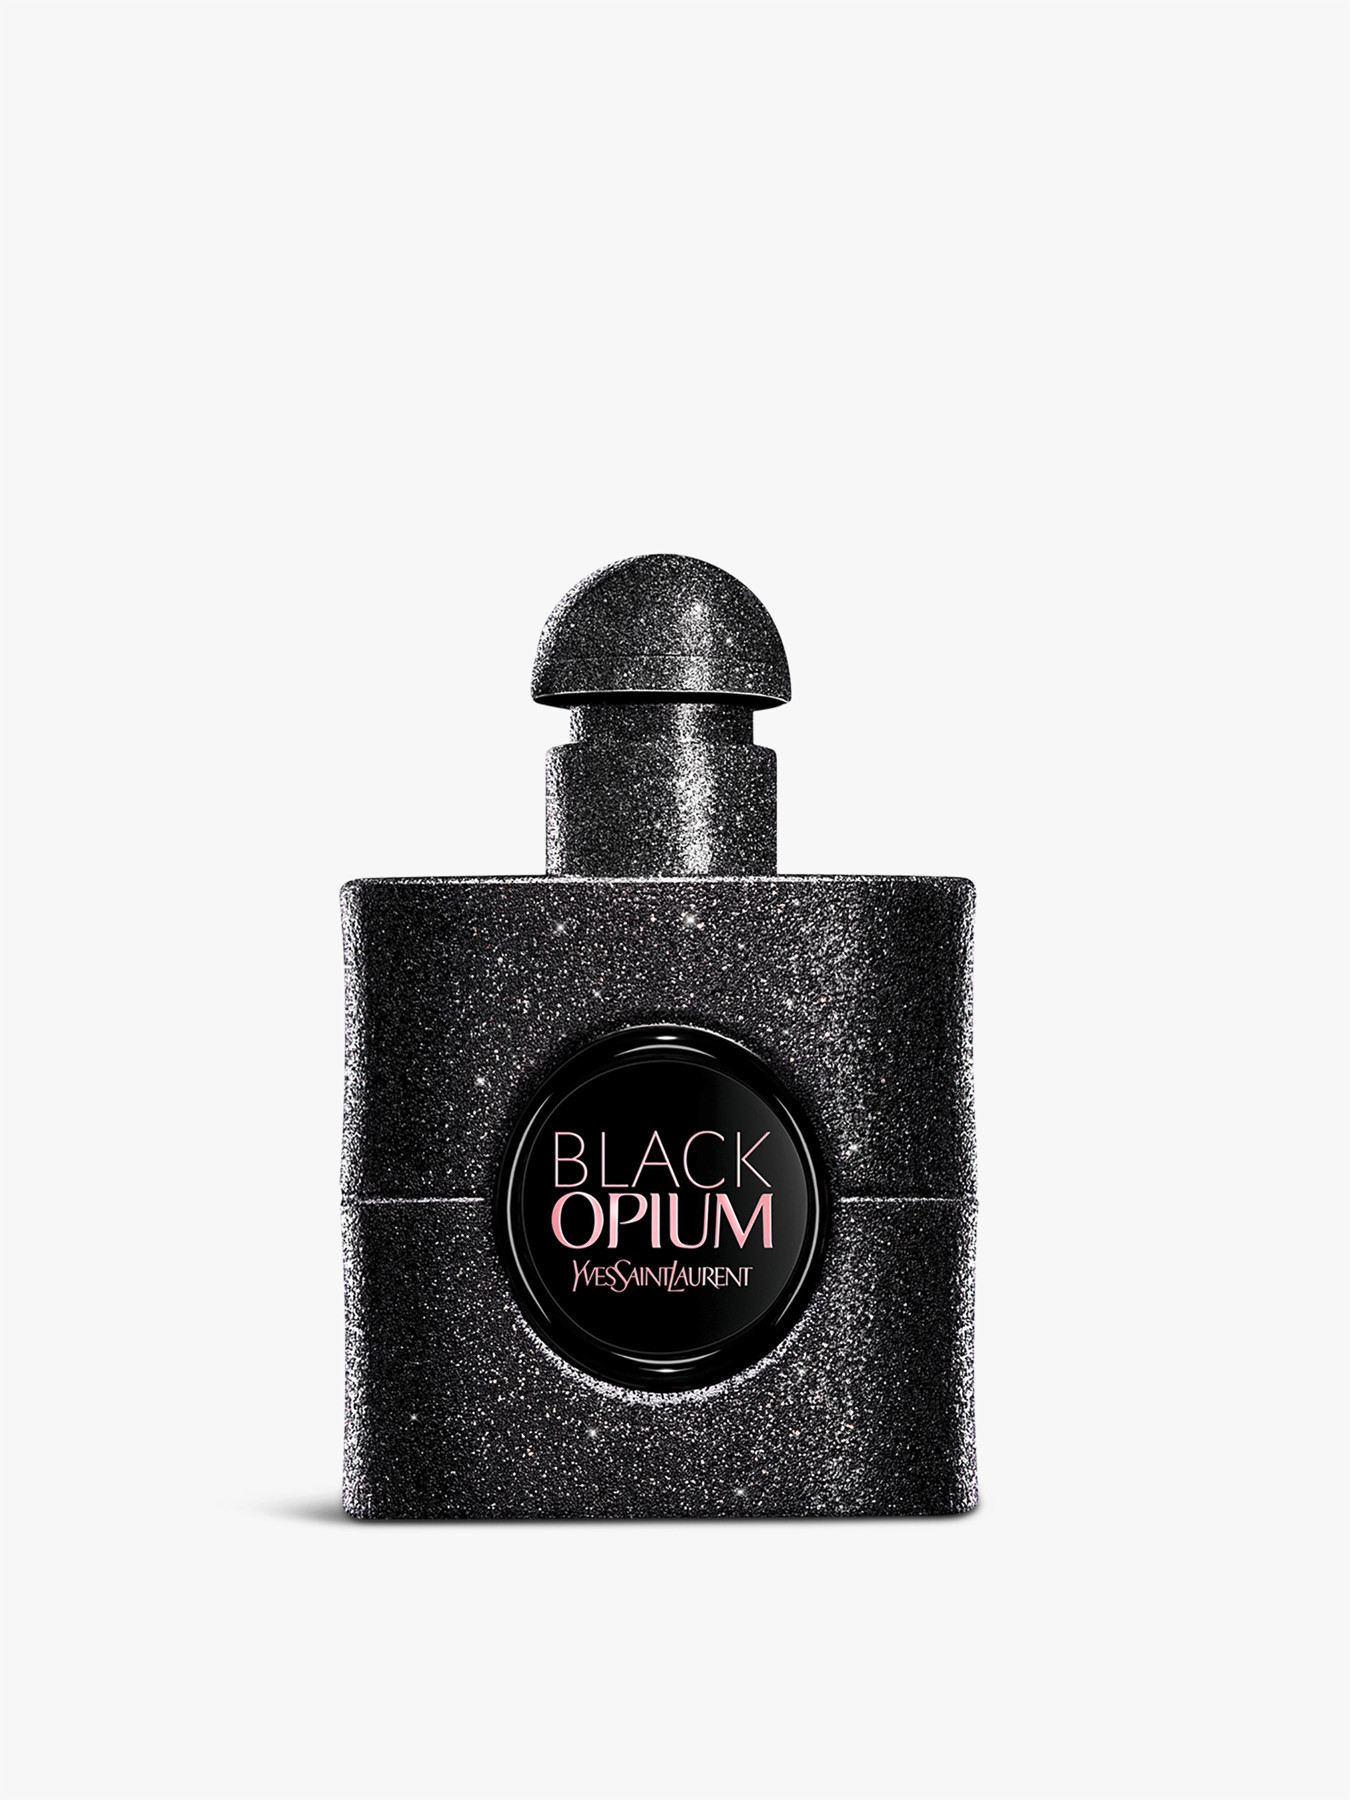 Ysl Black Opium Extreme Edp 30ml